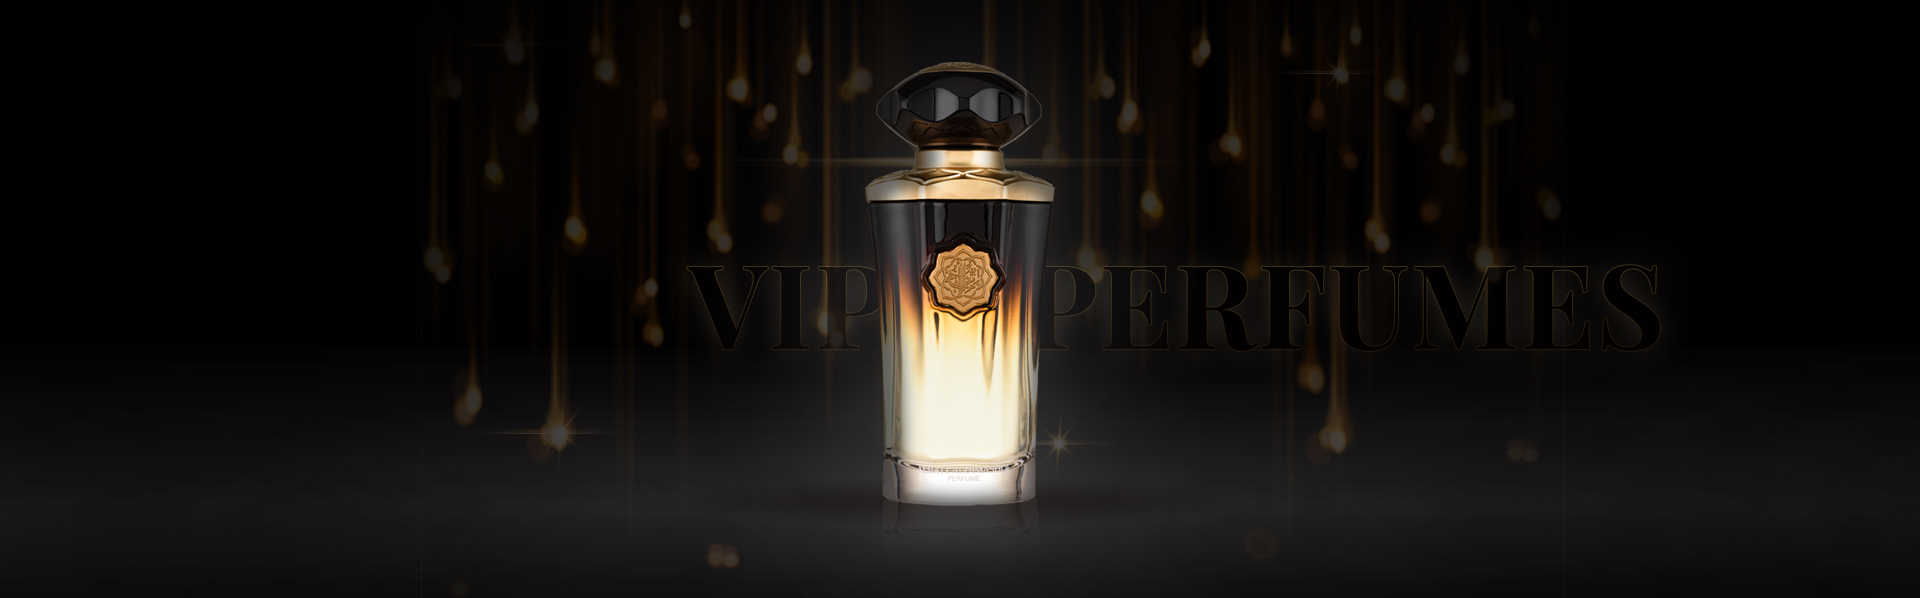 Top-Inexpensive-VIP-Perfumes-for-Men-Women-Online-Dubai-UAE